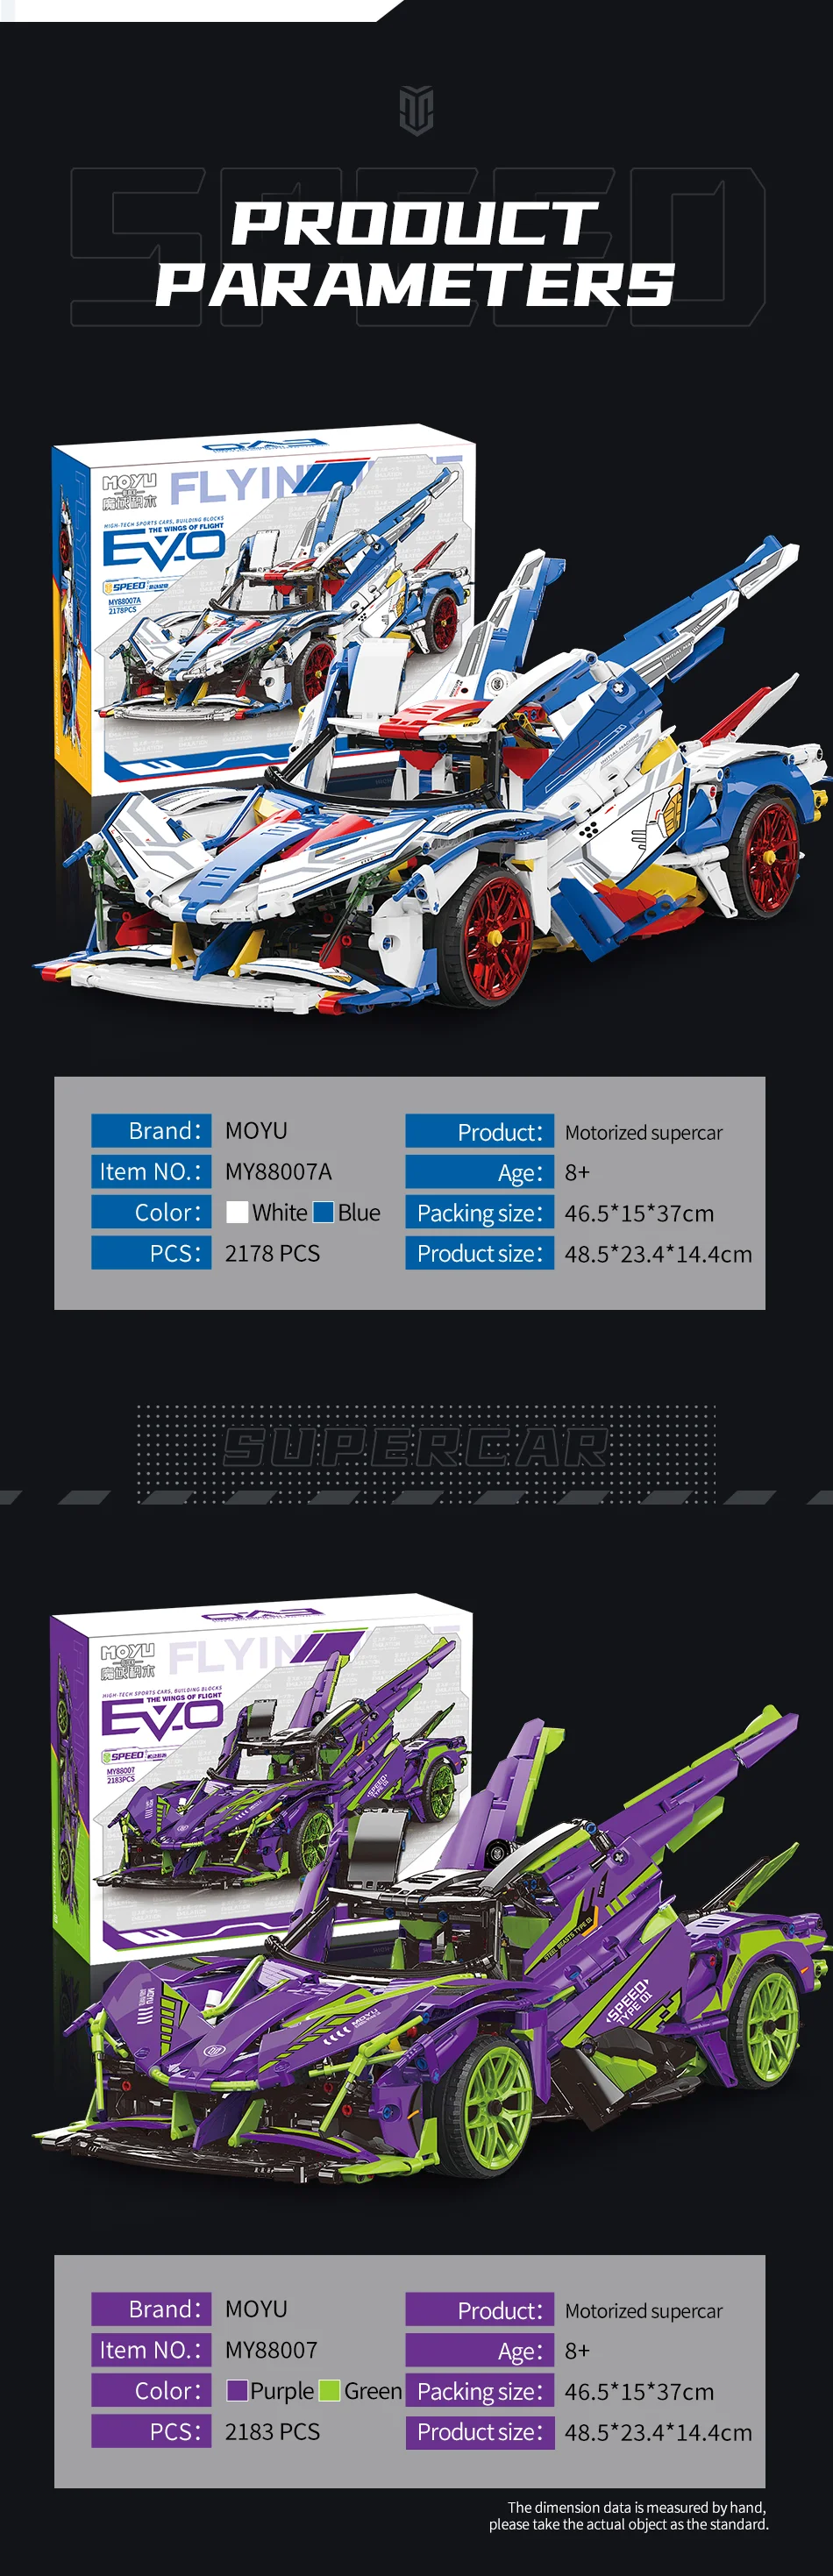 MOYU Sports Car Building Blocks Set, 1:10 EVO Racing Super Tech 